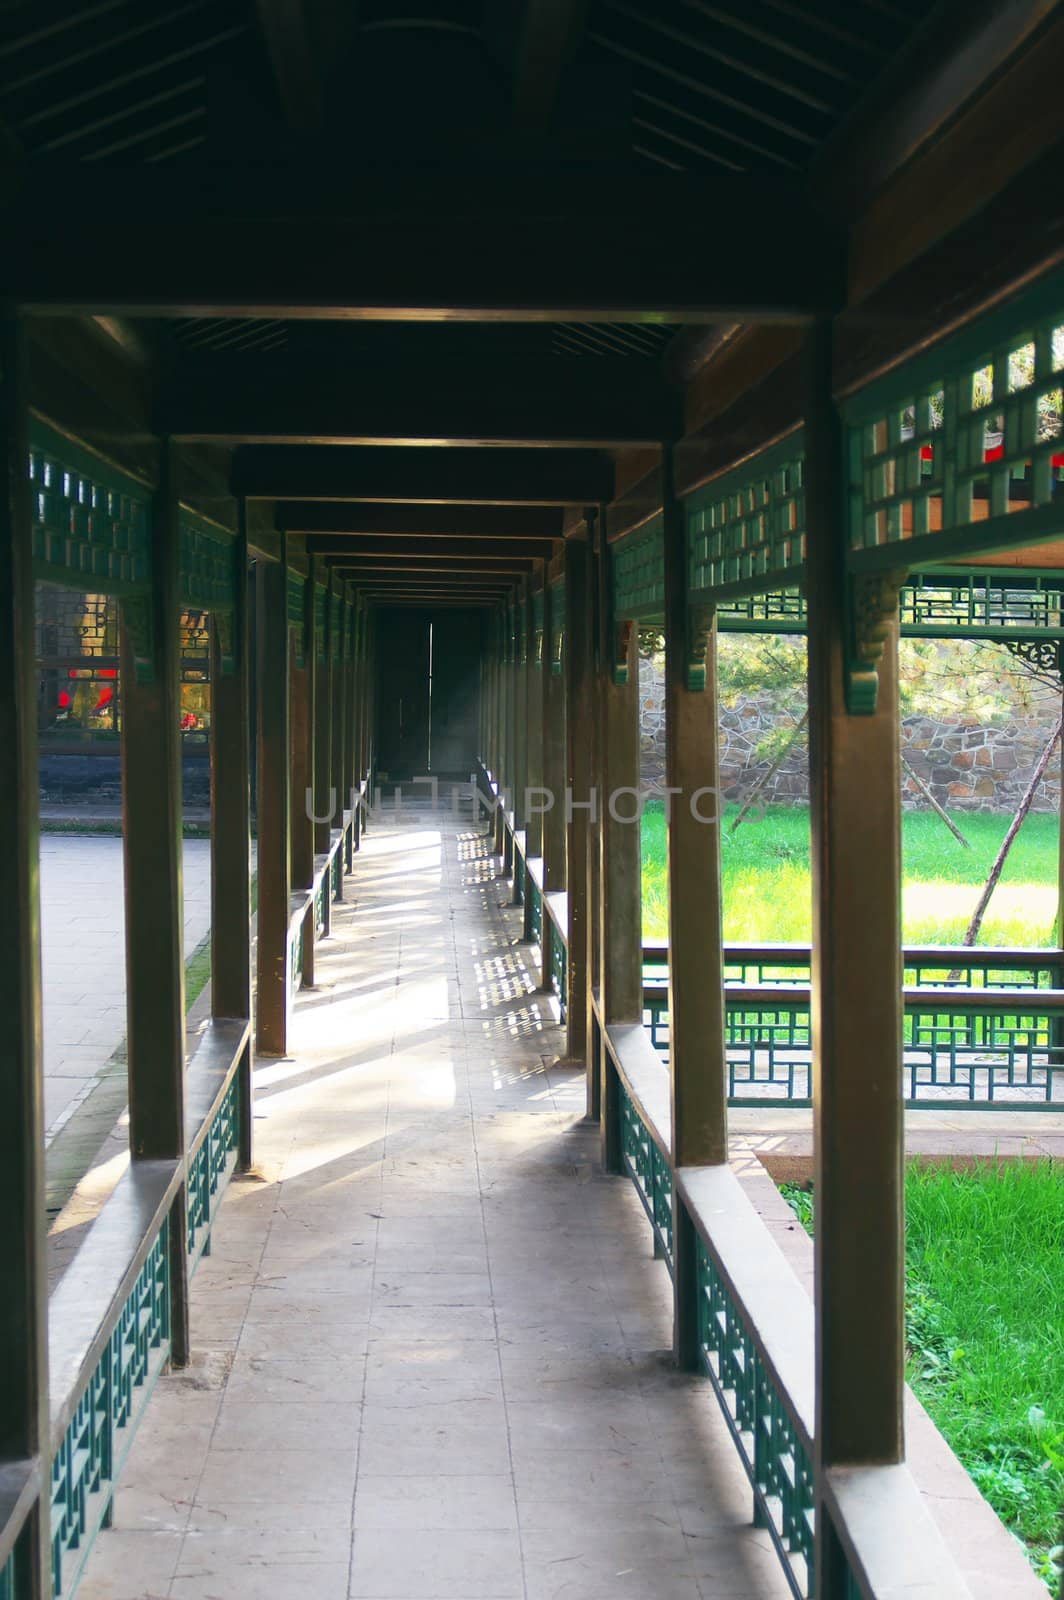 Corridor in Chengde Imperial Summer Resort by raywoo